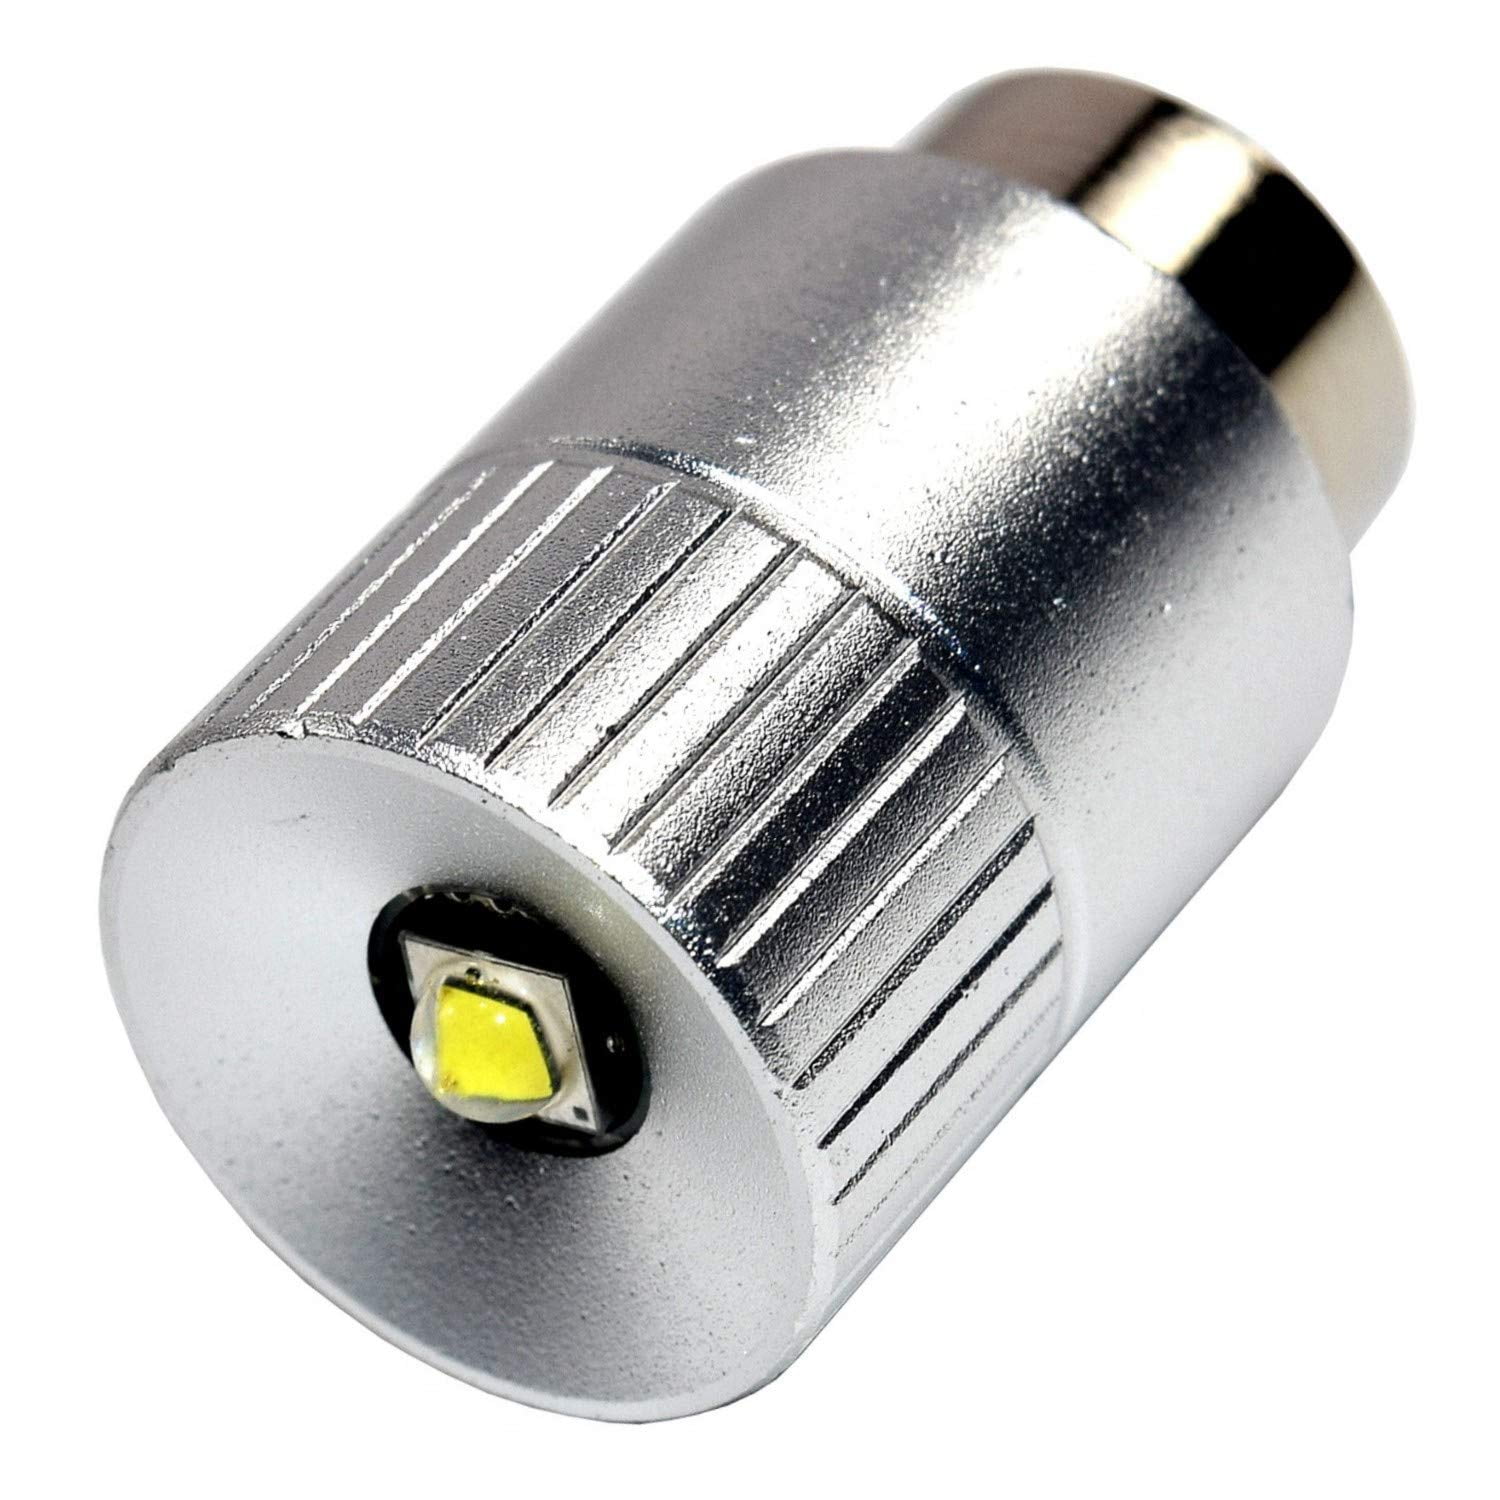 ST2D096 HQRP LED Bulb for MagLight S3D036 S3D115 ST2D106 ST2P096 Flashlight 